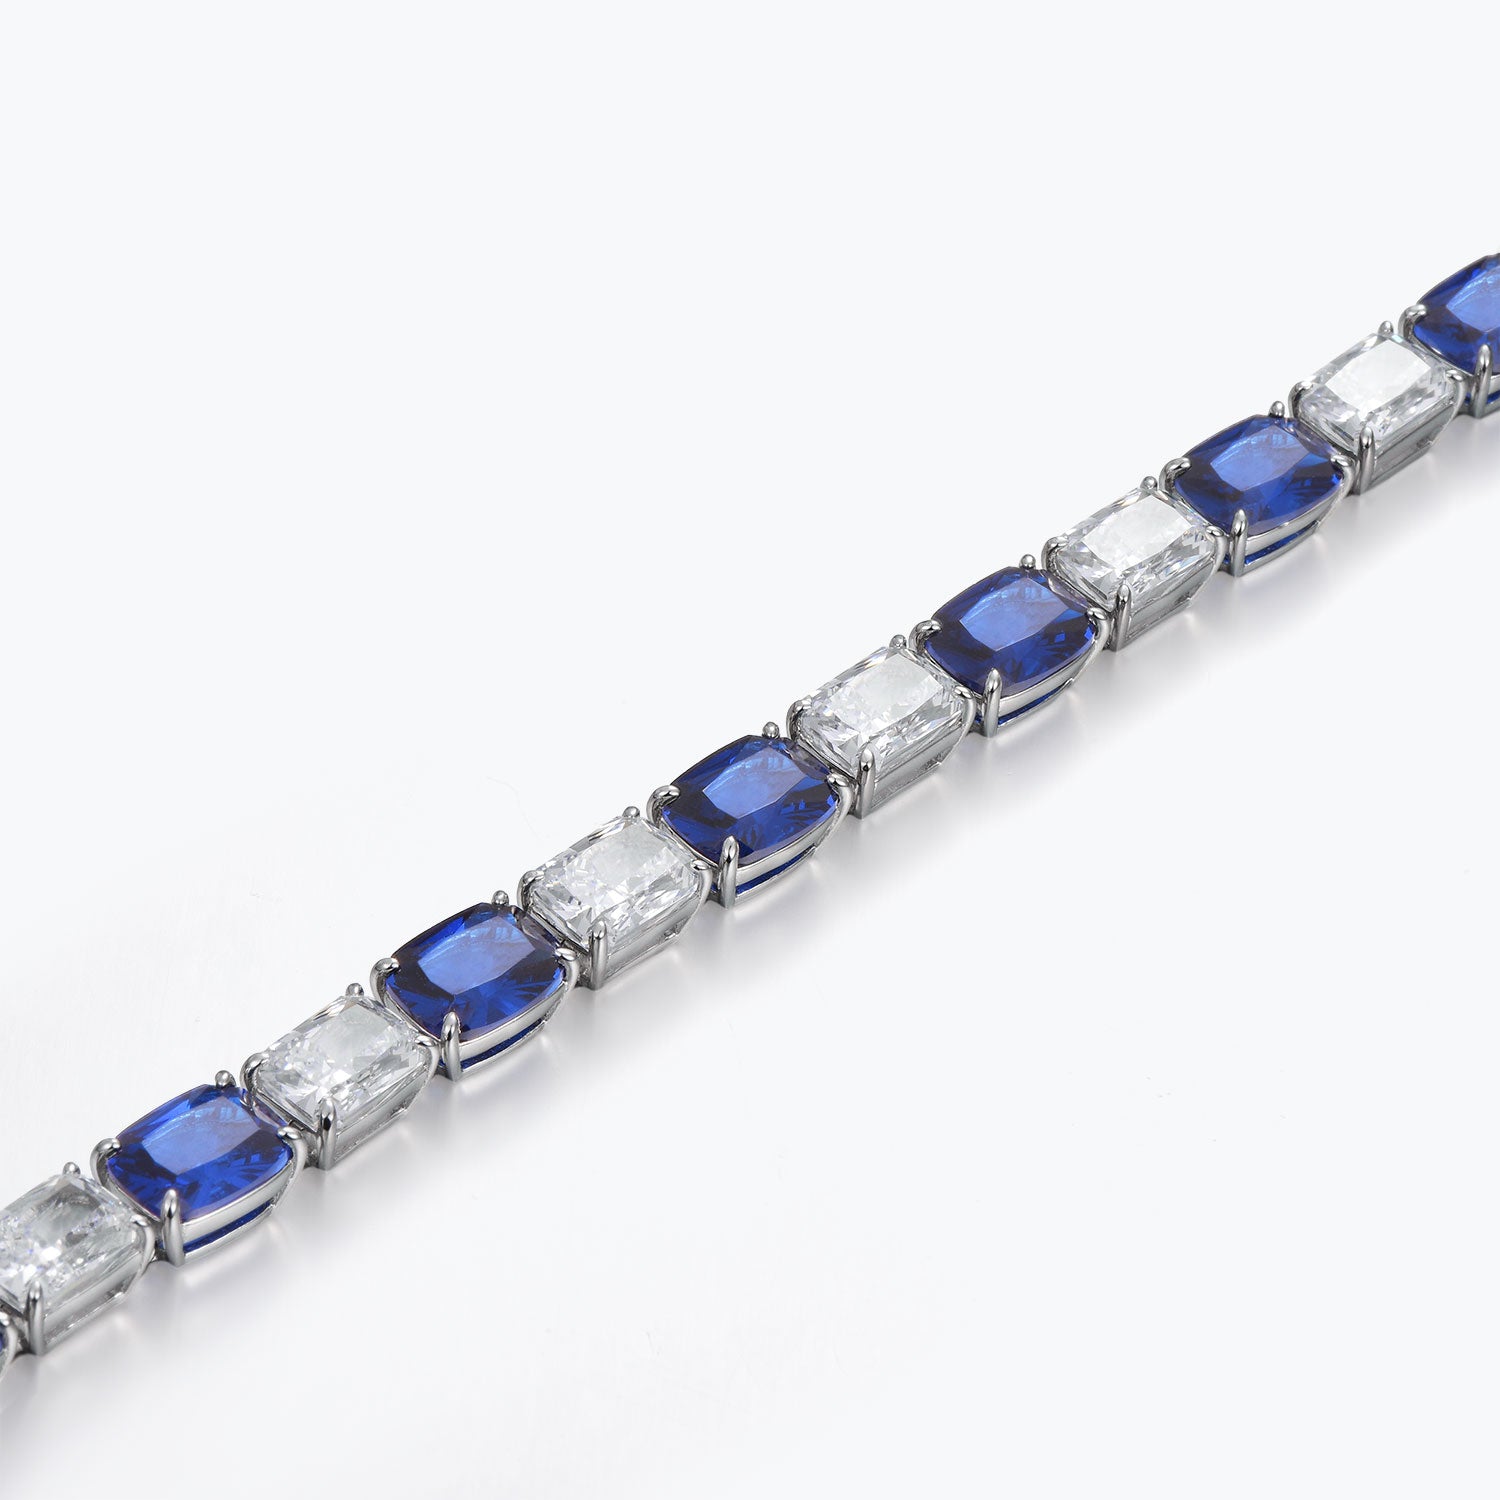 Dissoo® Blue & White Sterling Silver Tennis Bracelet